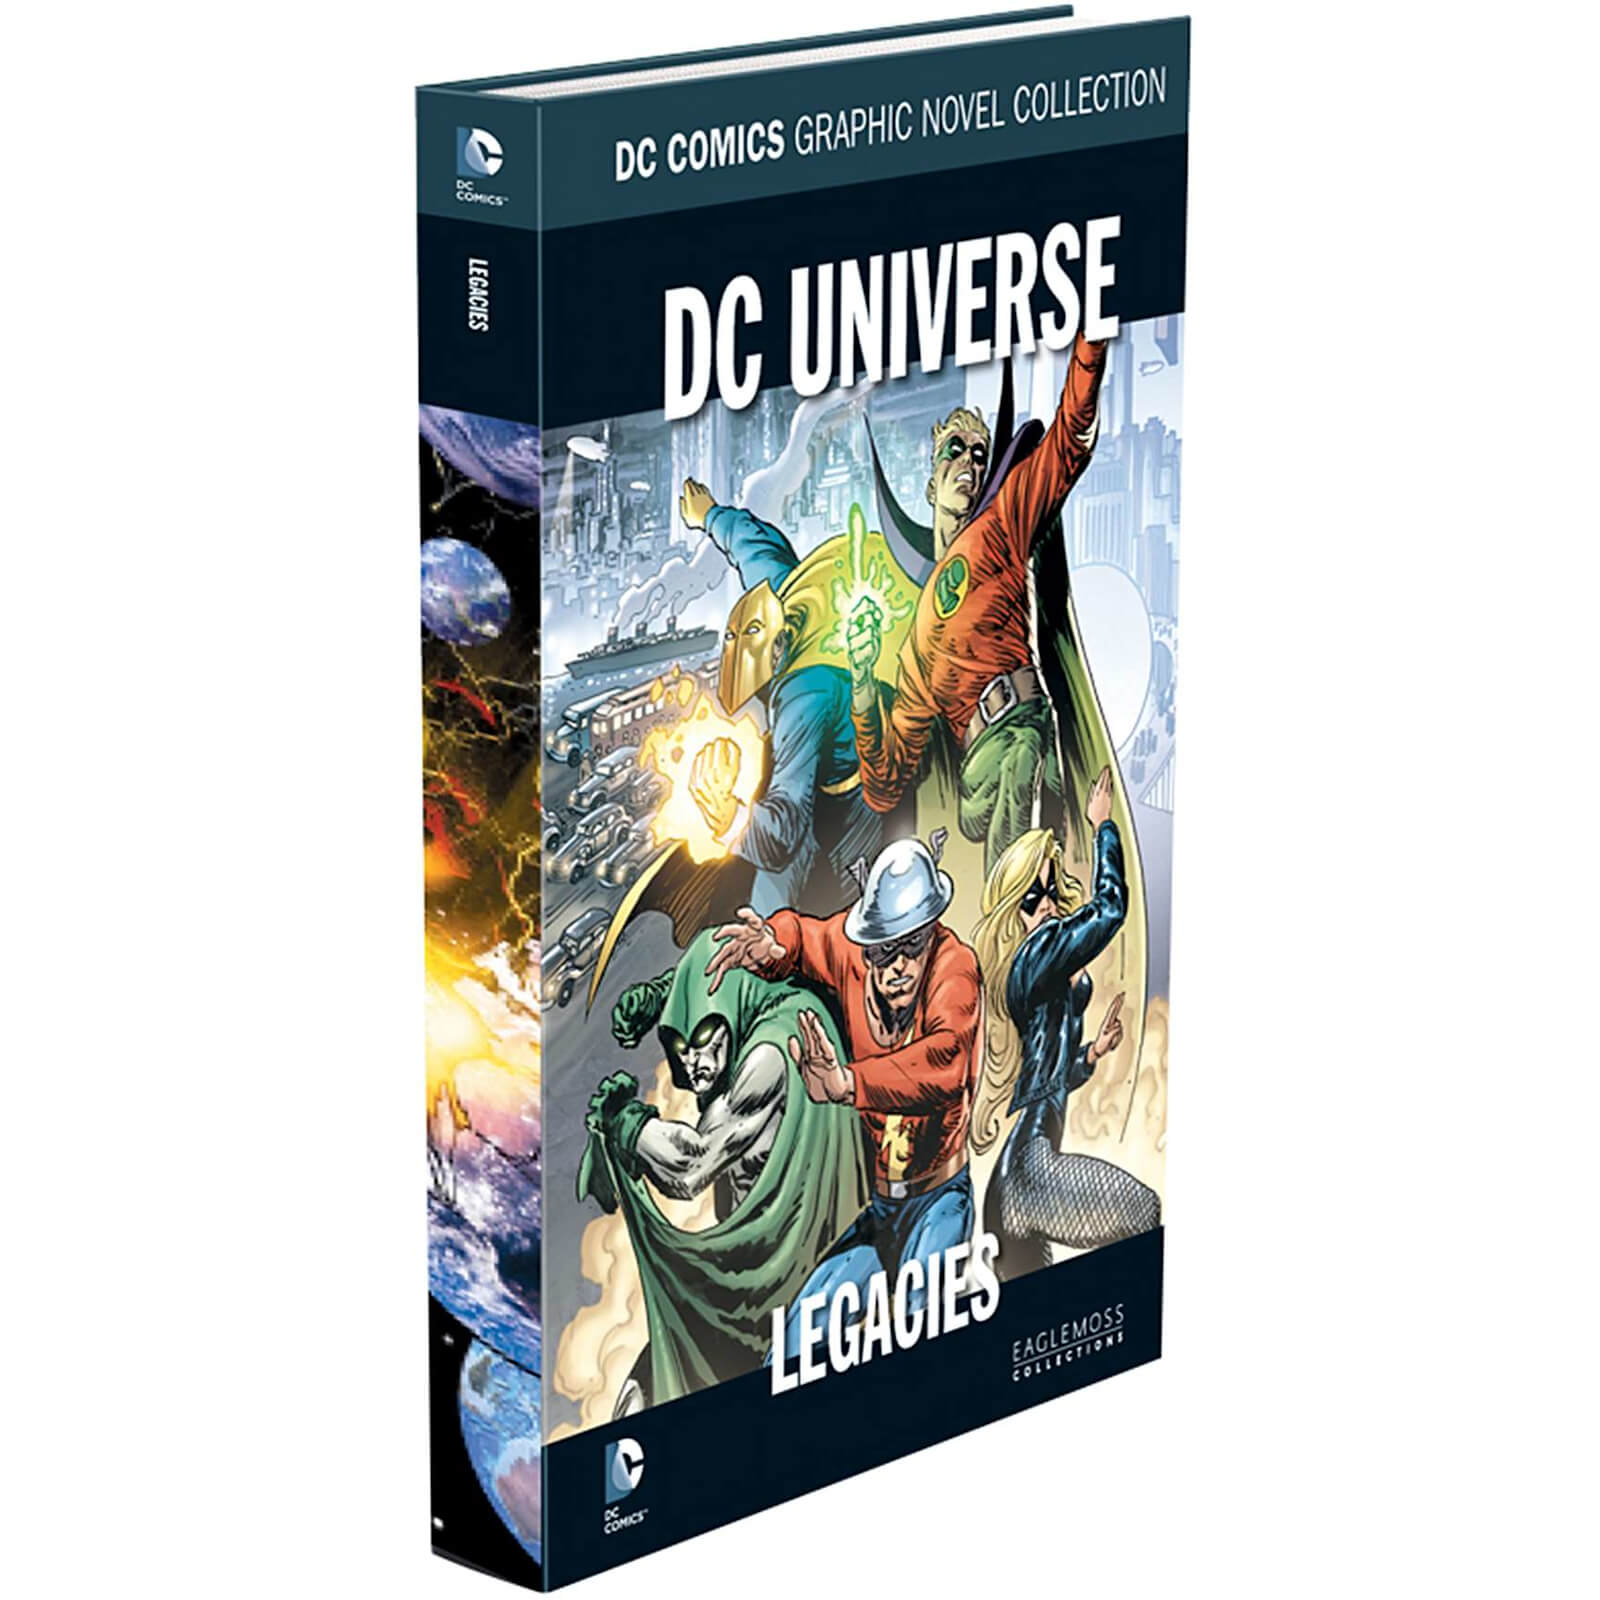 DC Comics Graphic Novel Collection - DC Universe Legacies - Special Edition 3